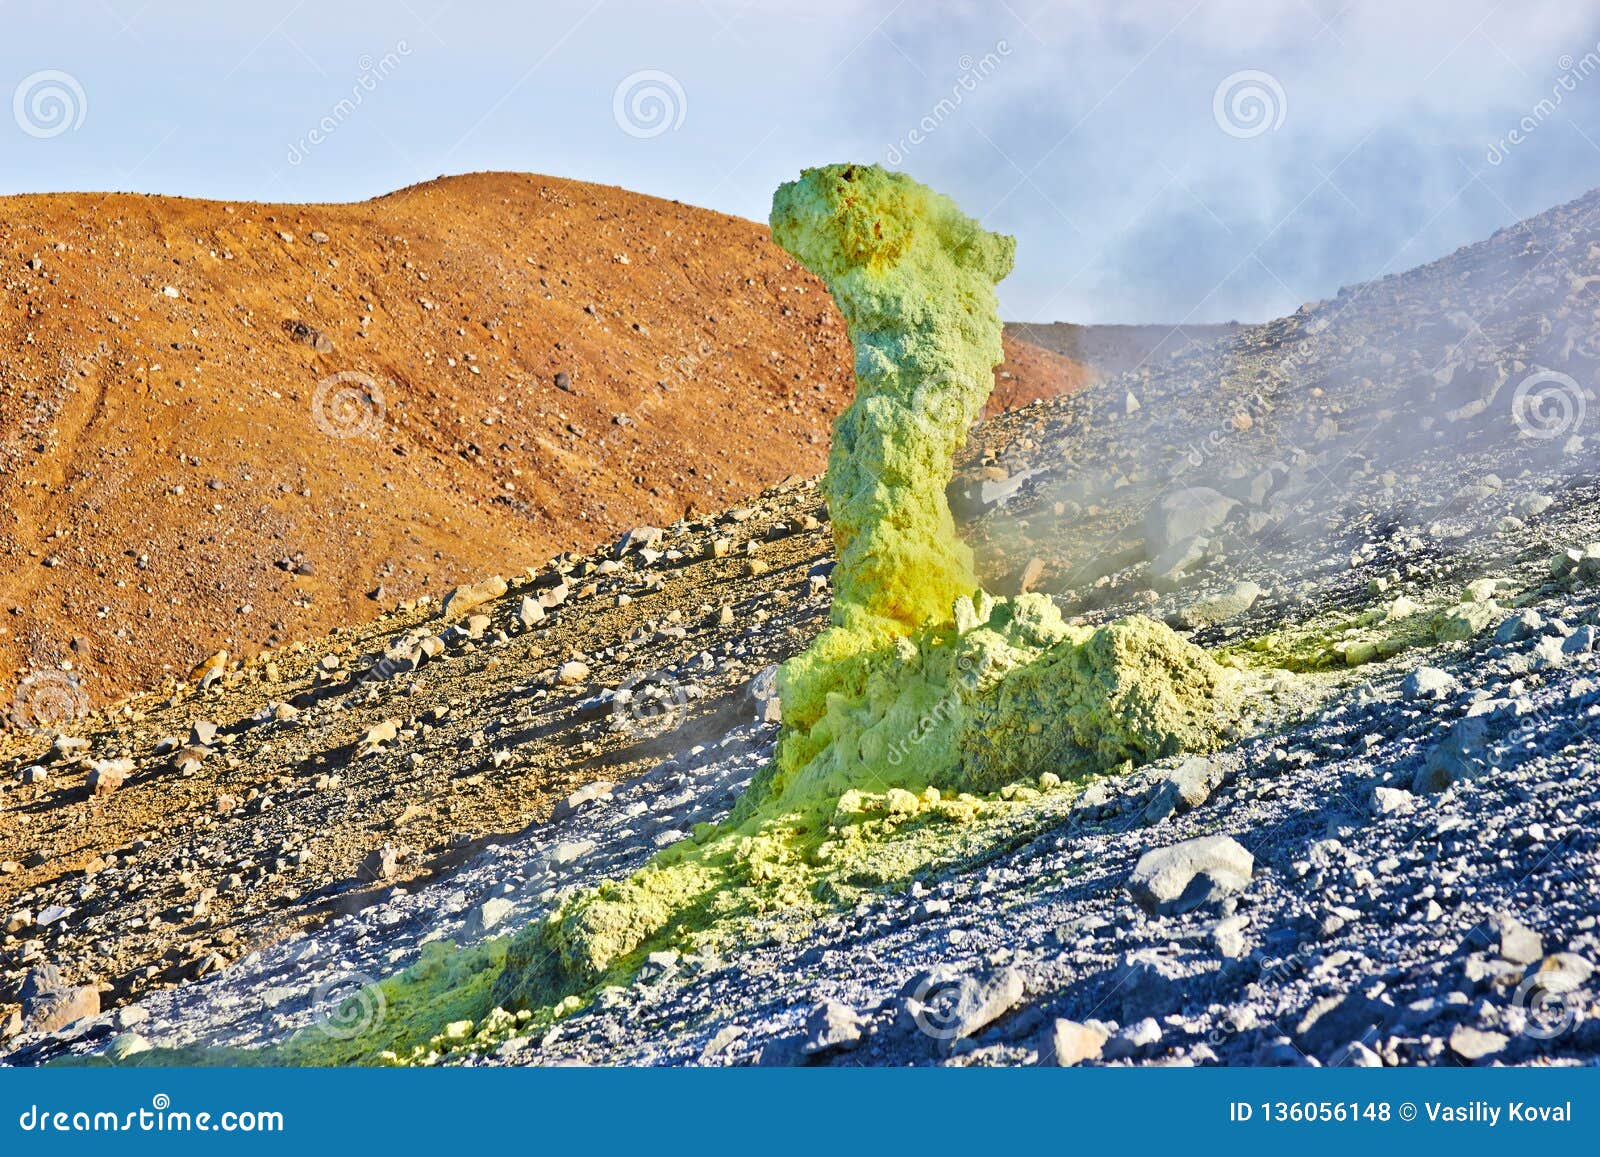 volcanic activity, sulfur fumarole